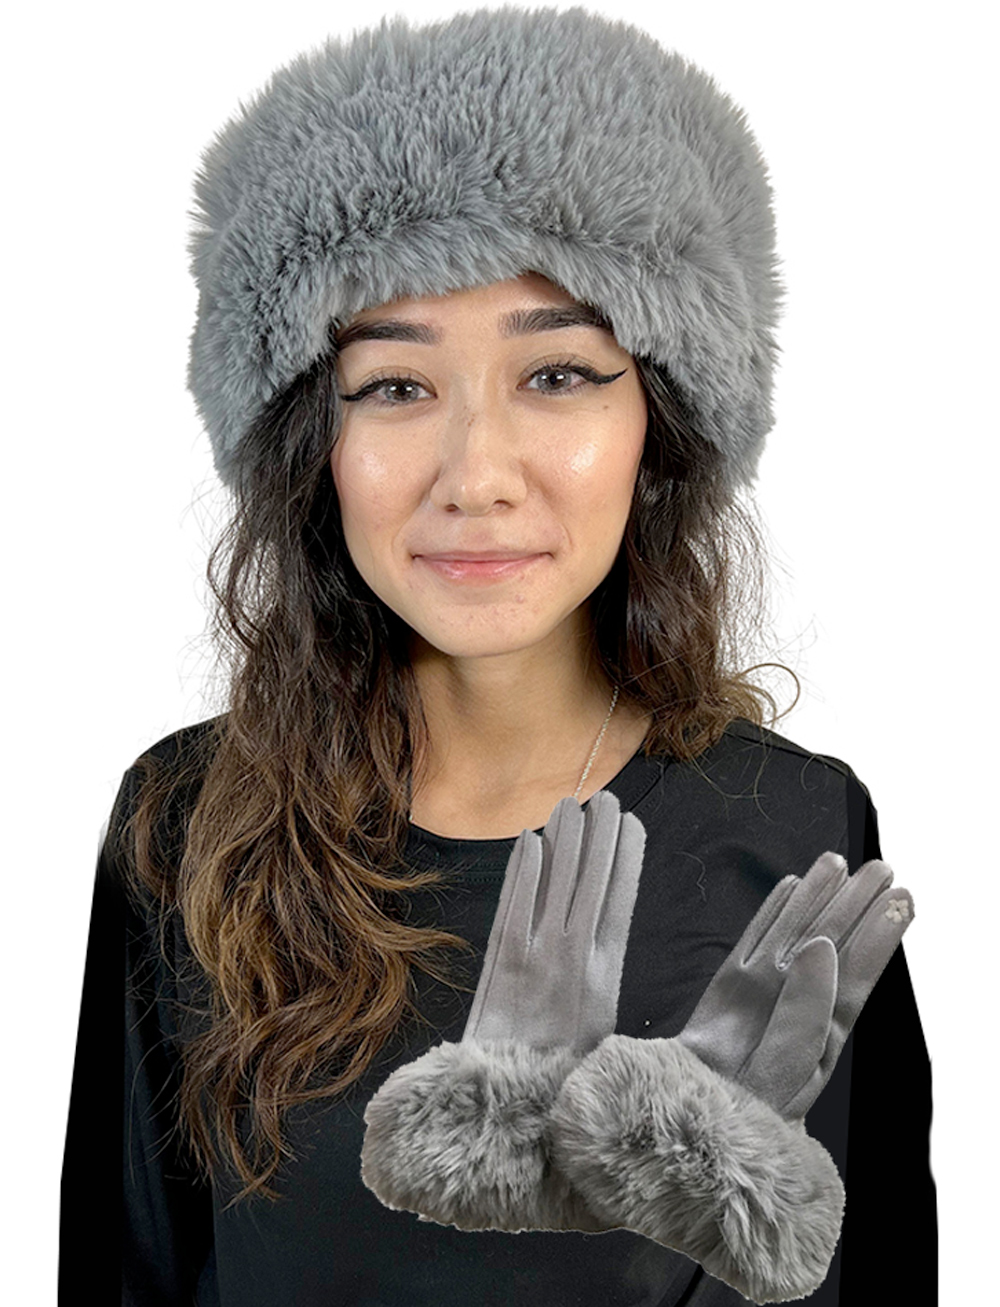 3750 - Fur Headbands with Fur Trim Matching Gloves